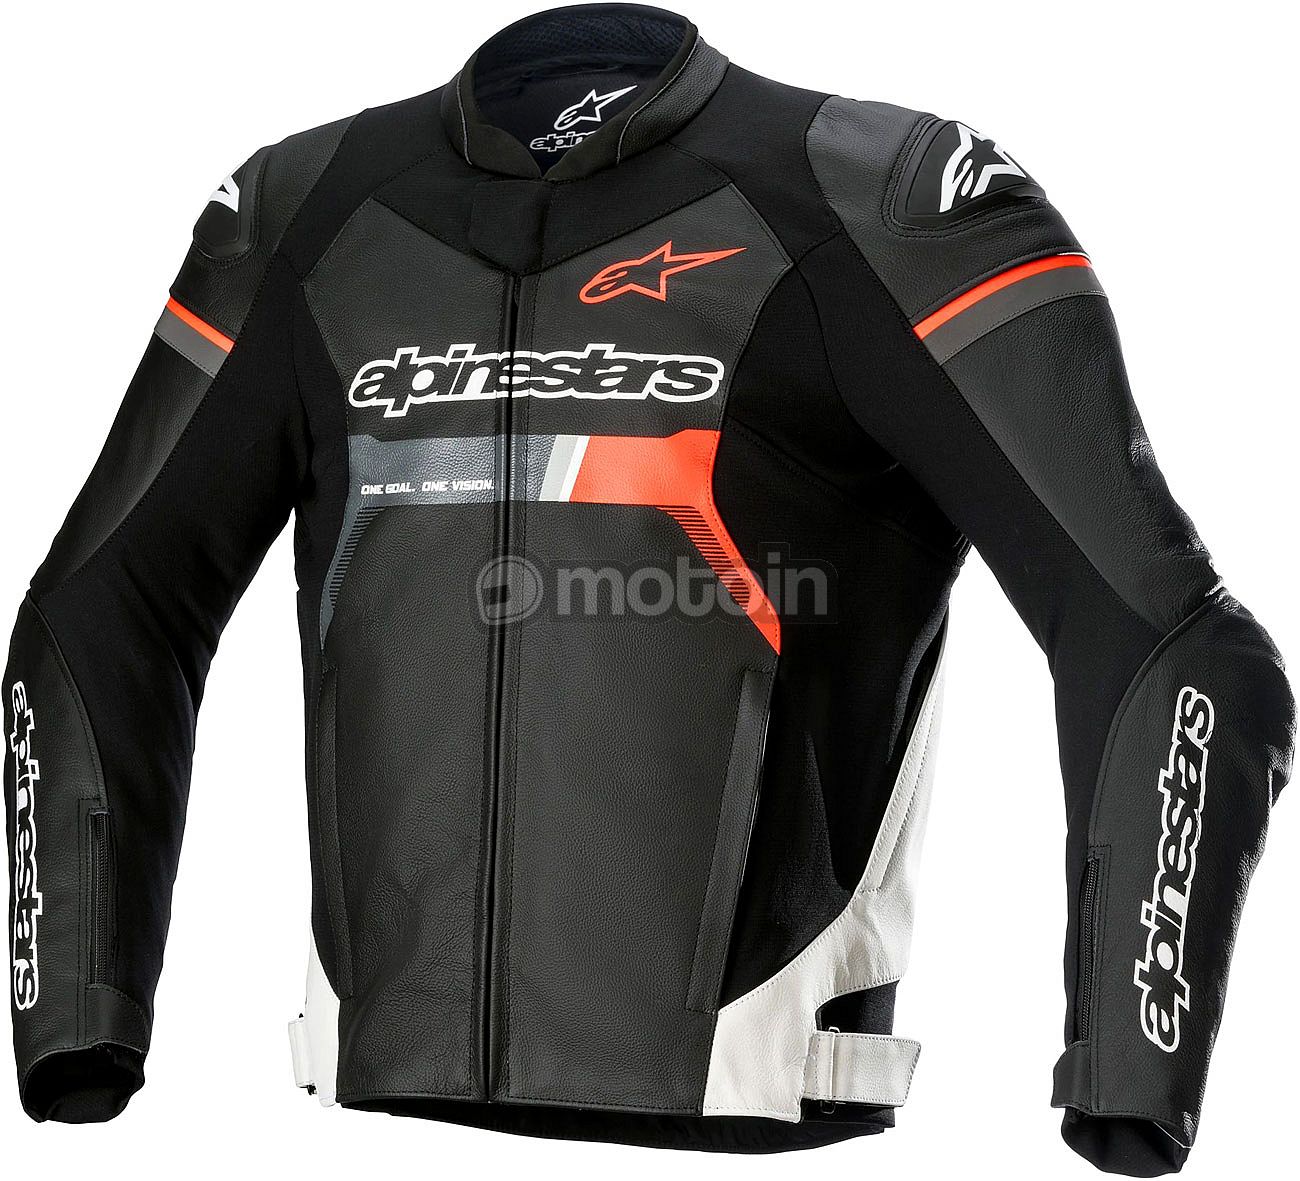 Alpinestars GP Force, leather jacket - motoin.de